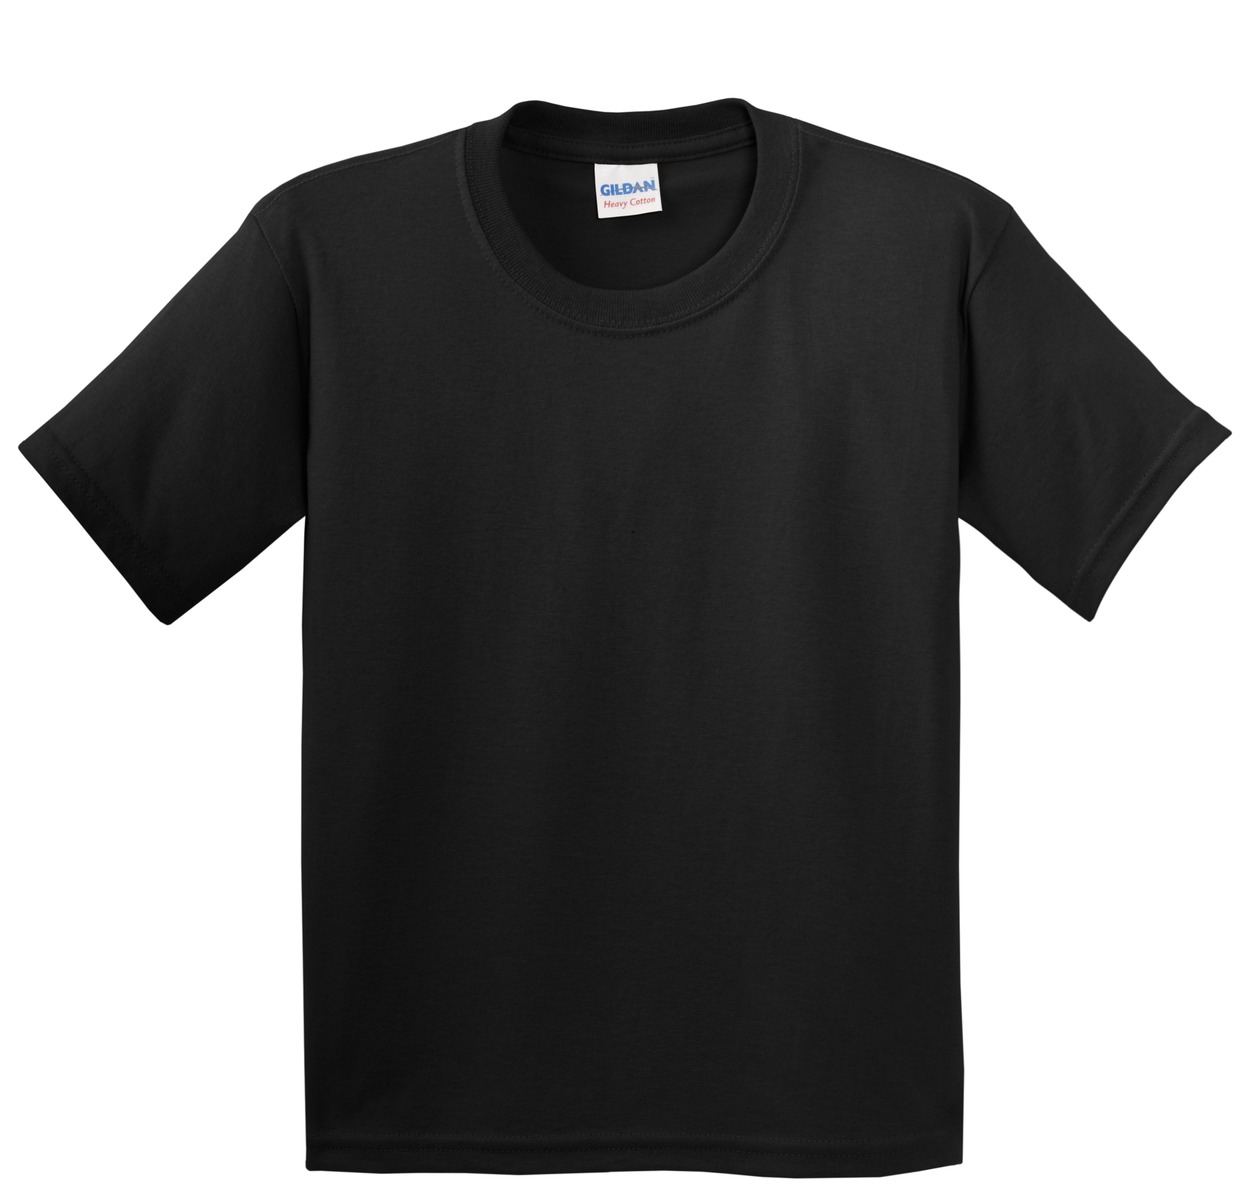 Artix - Big Boys T-Shirts and Tank Tops, up to Big Boys Size 24 - San Francisco - image 4 of 5